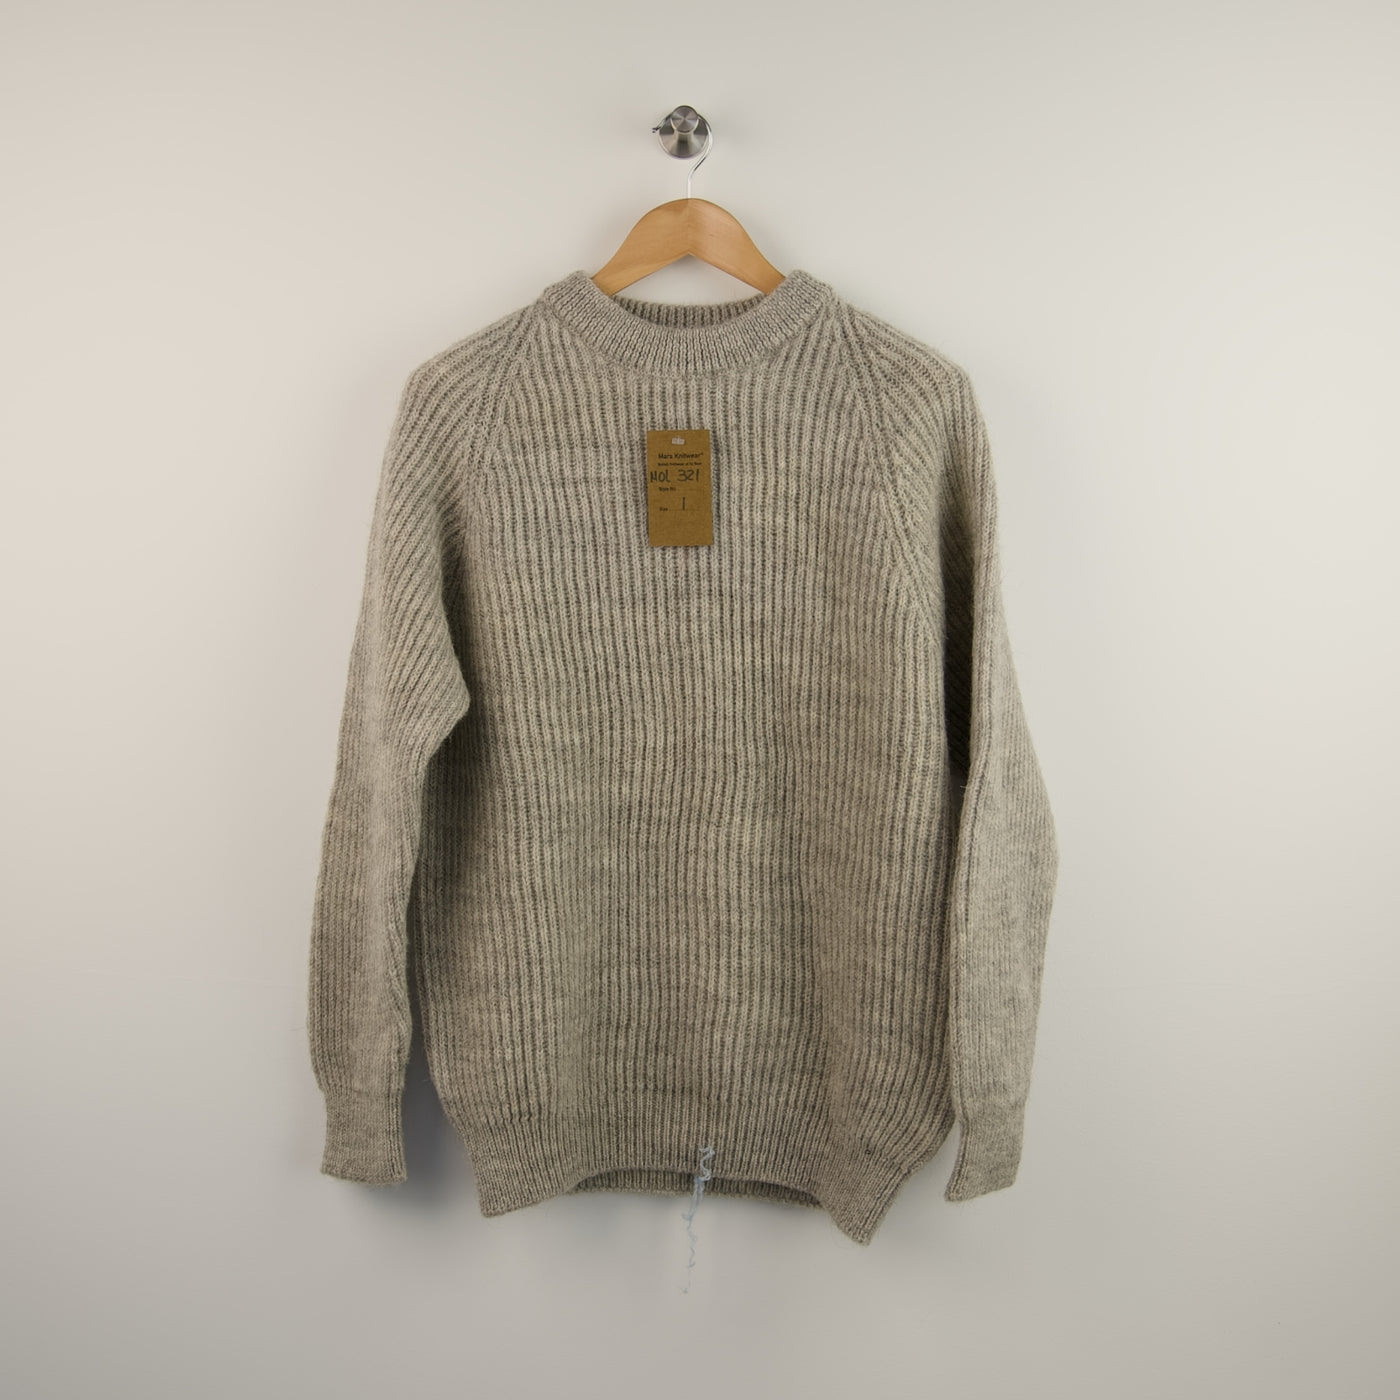 British Wool Seamless - 320 - Hawking - Light Grey